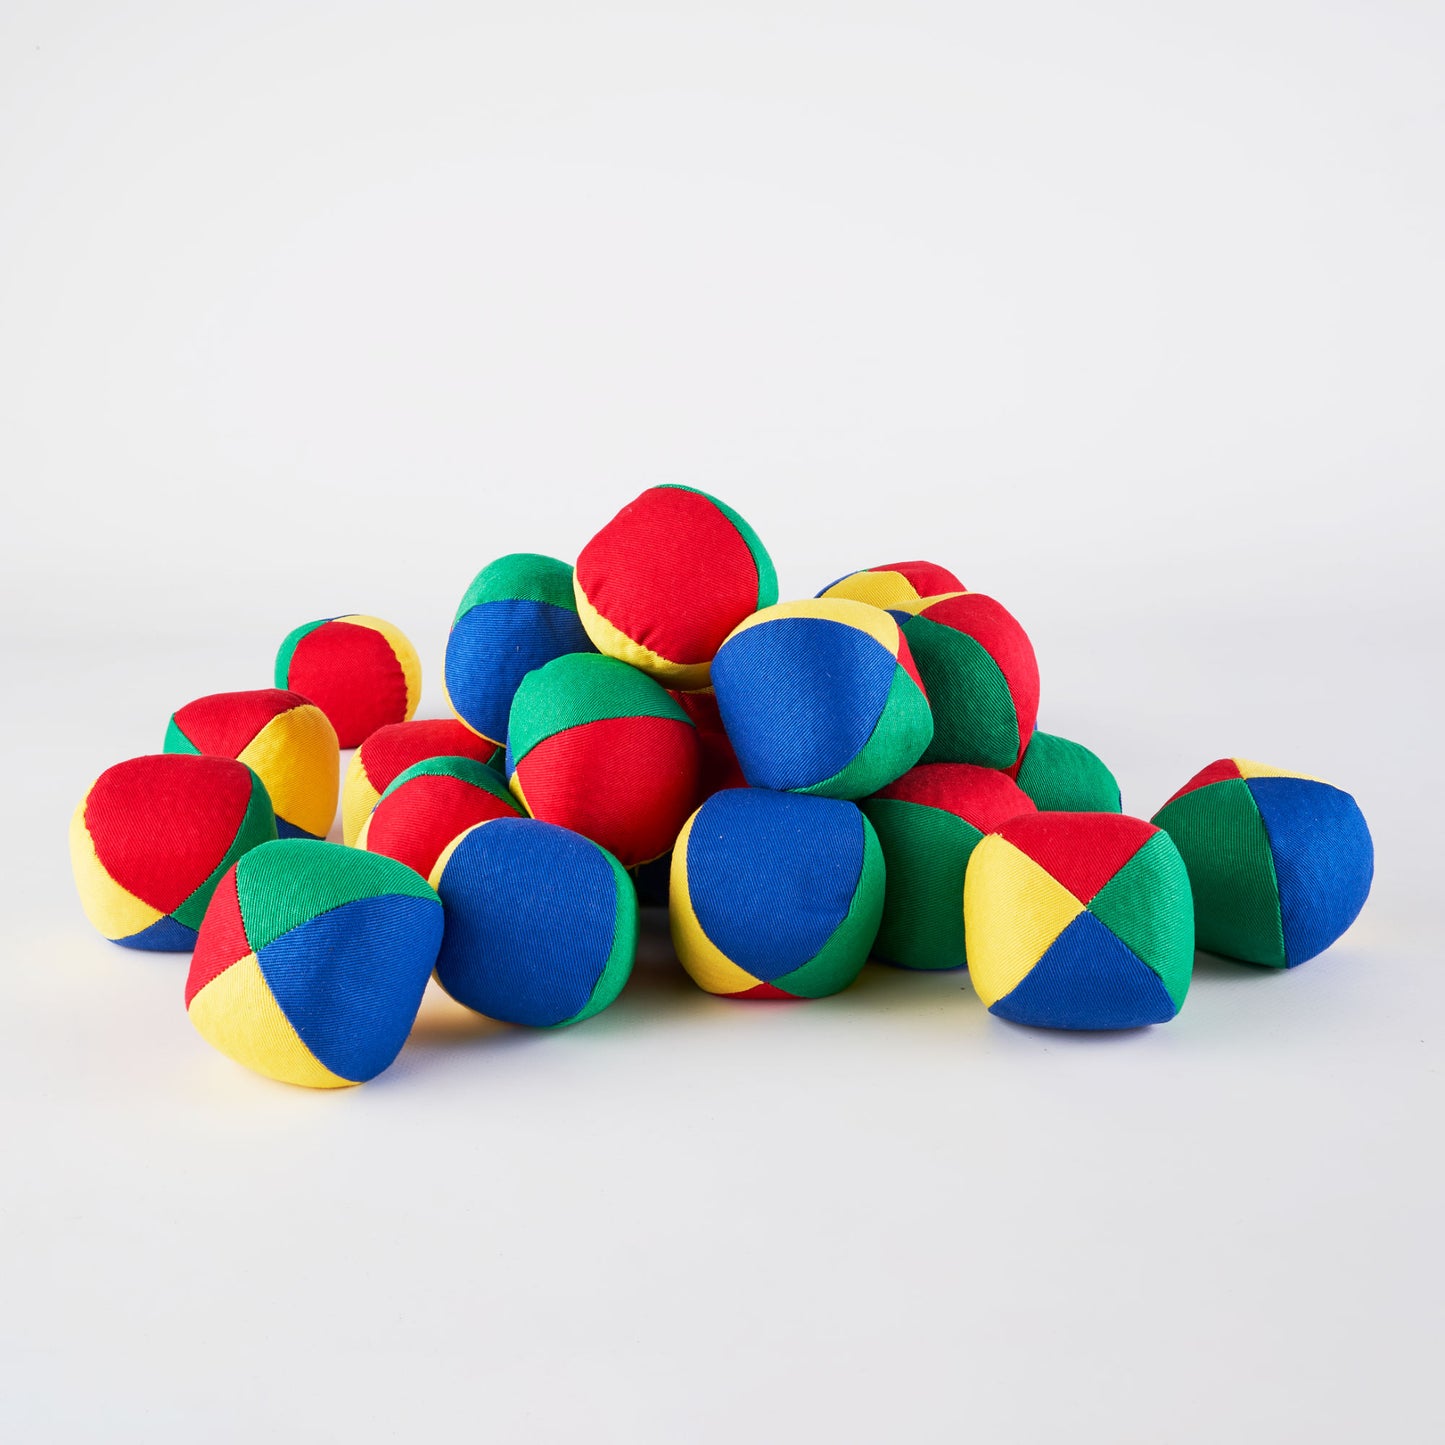 Cube Juggling Ball - Bulk Pack 30 Balls